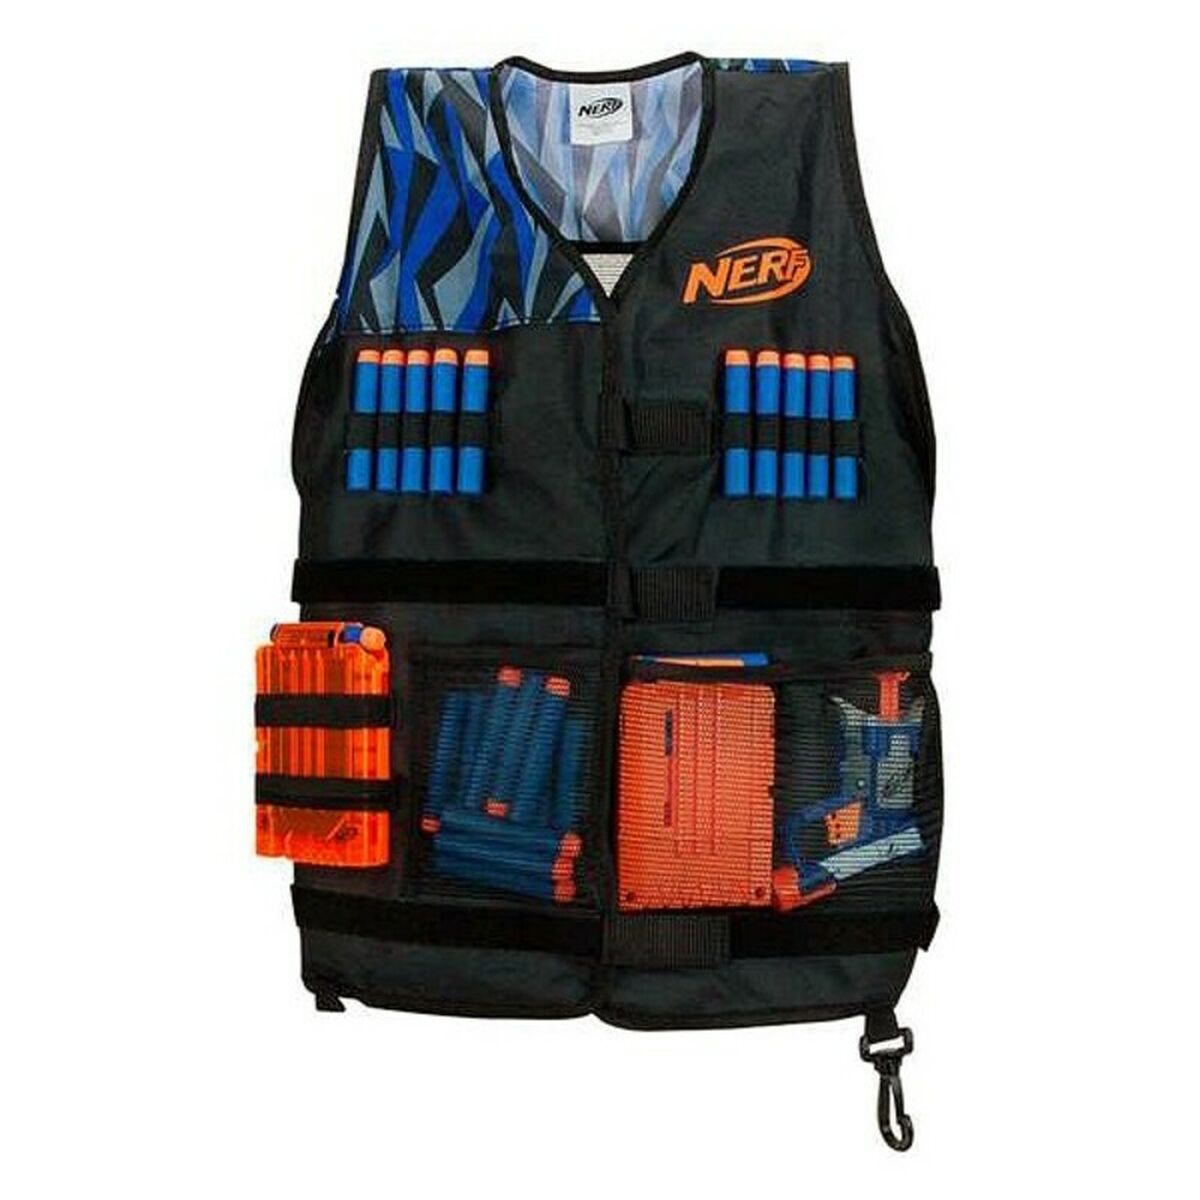 Nerf Elite Tactical Vest (30 x 5 x 30 x 5 x 51 cm)